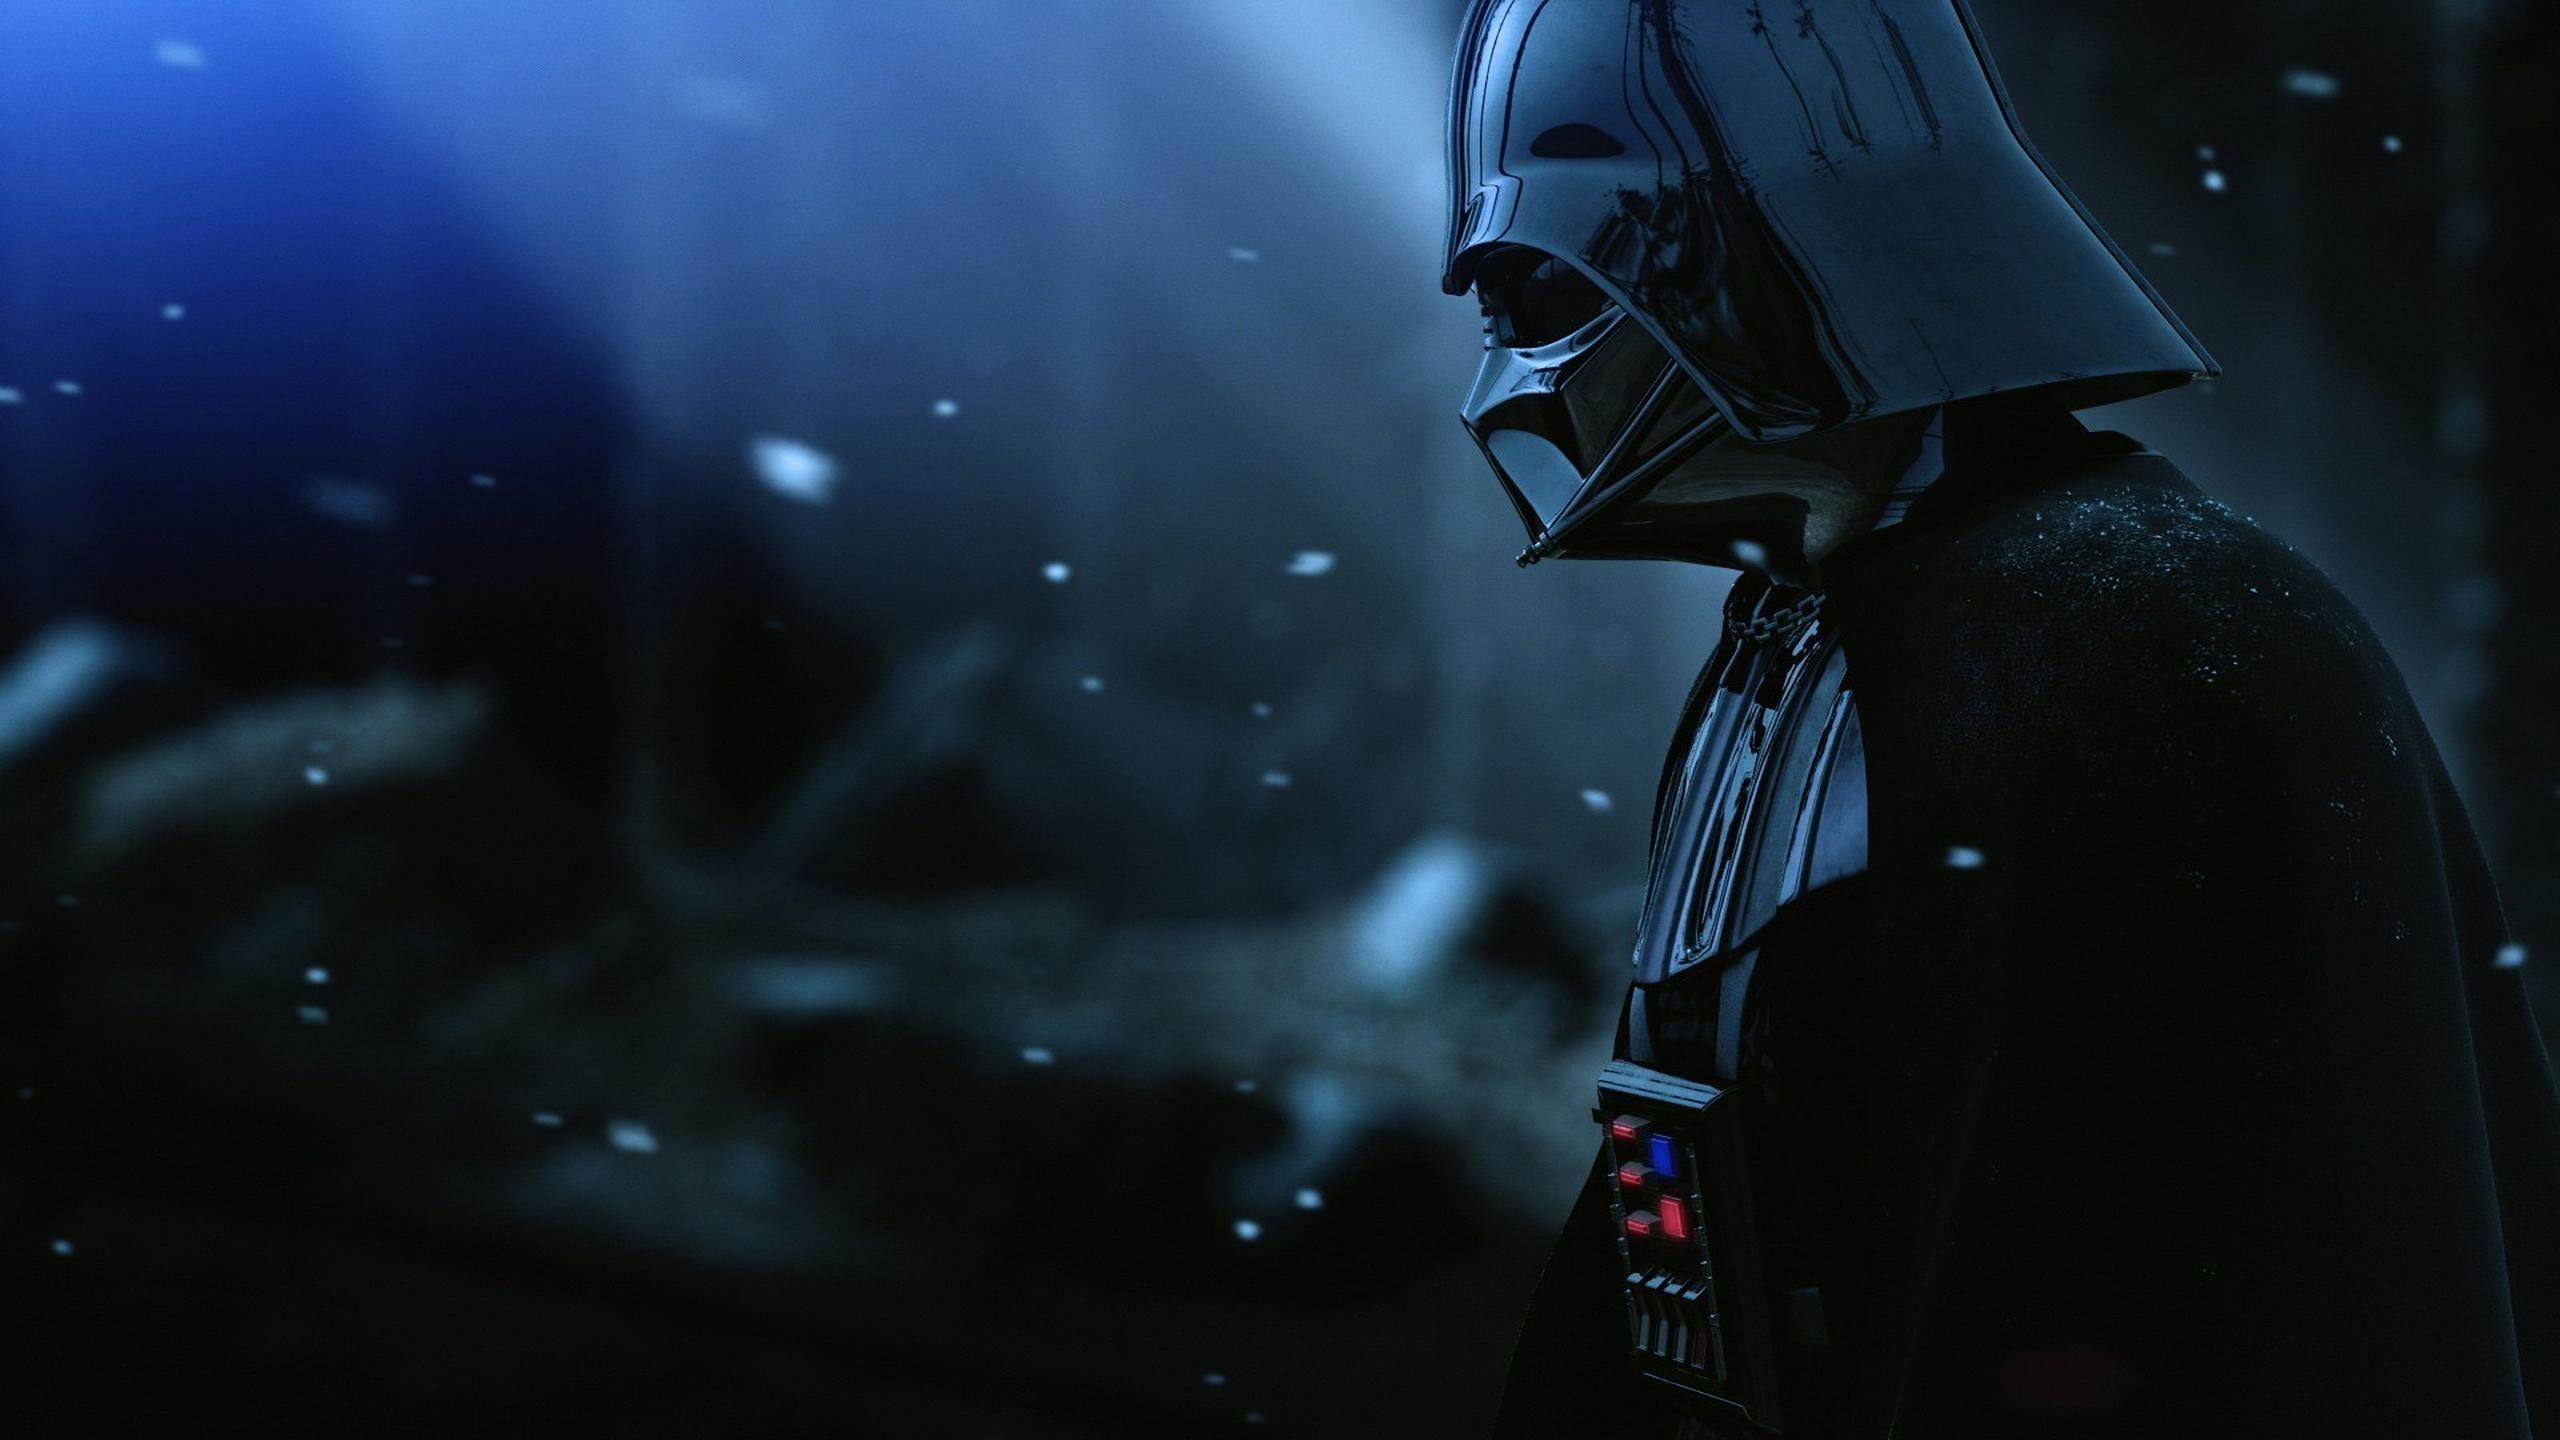 Darth Vader Armor Star Wars Film Wallpaper Image High Quality